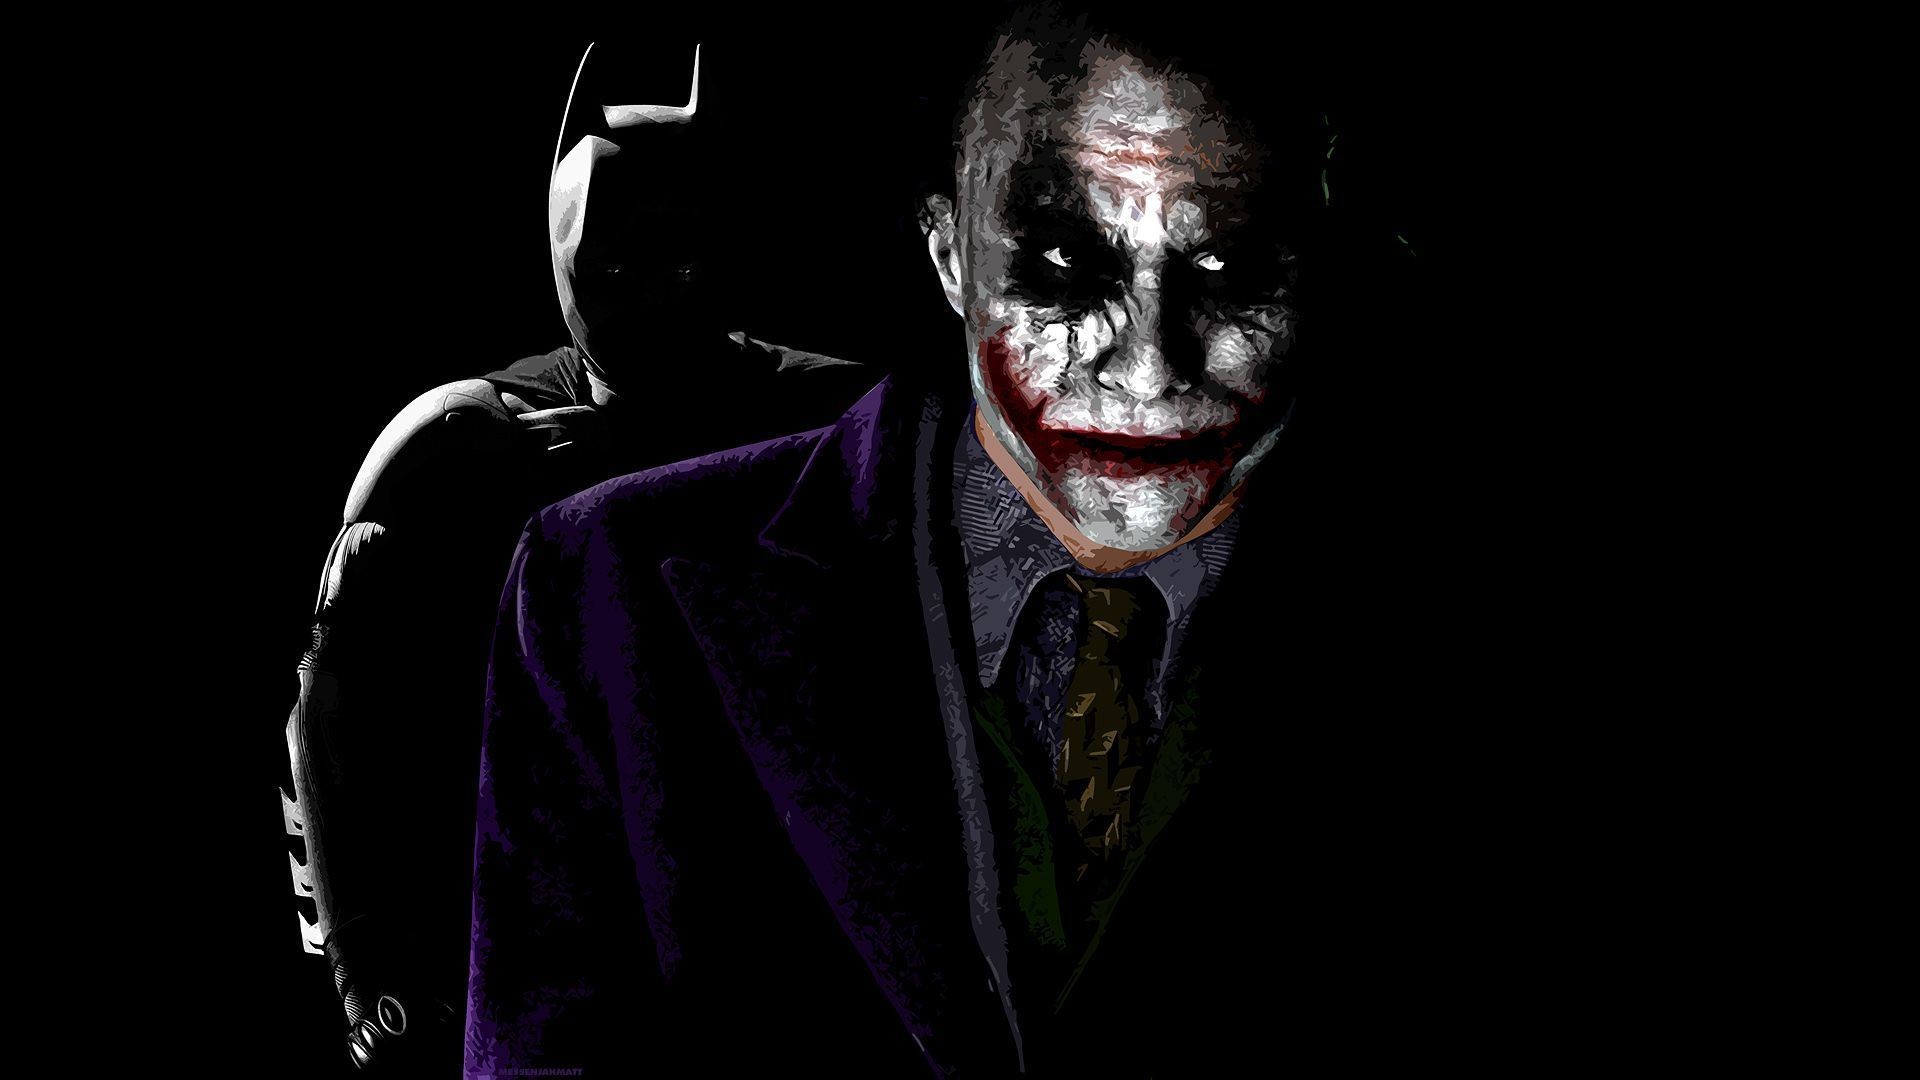 Batman Vs Joker Wallpaper Image